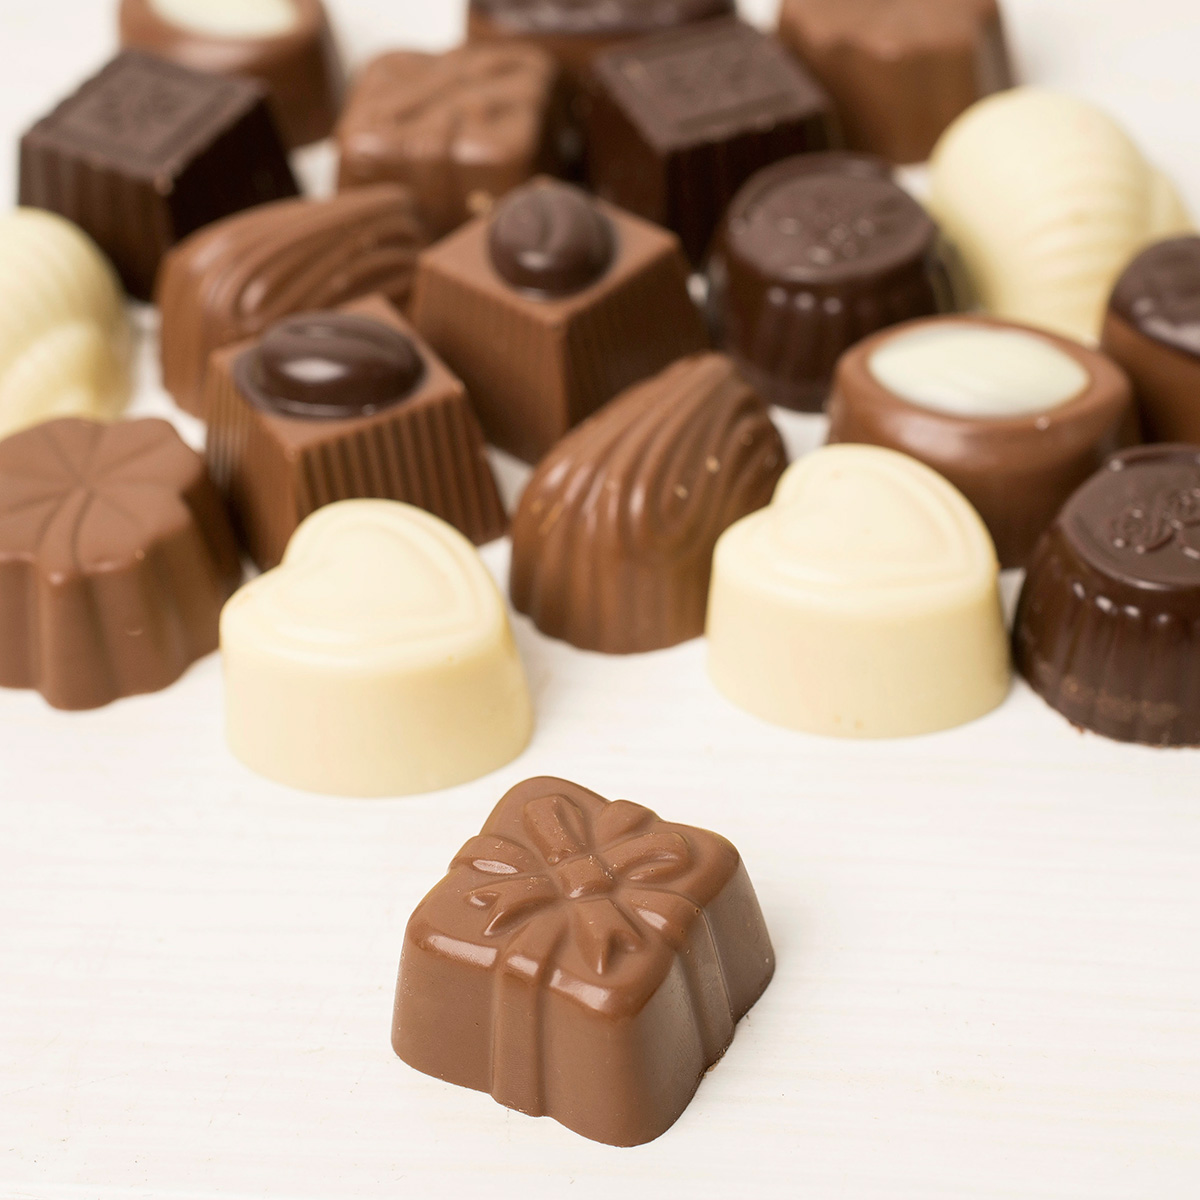 Personalised Belgian Chocolates - Pop Birthday